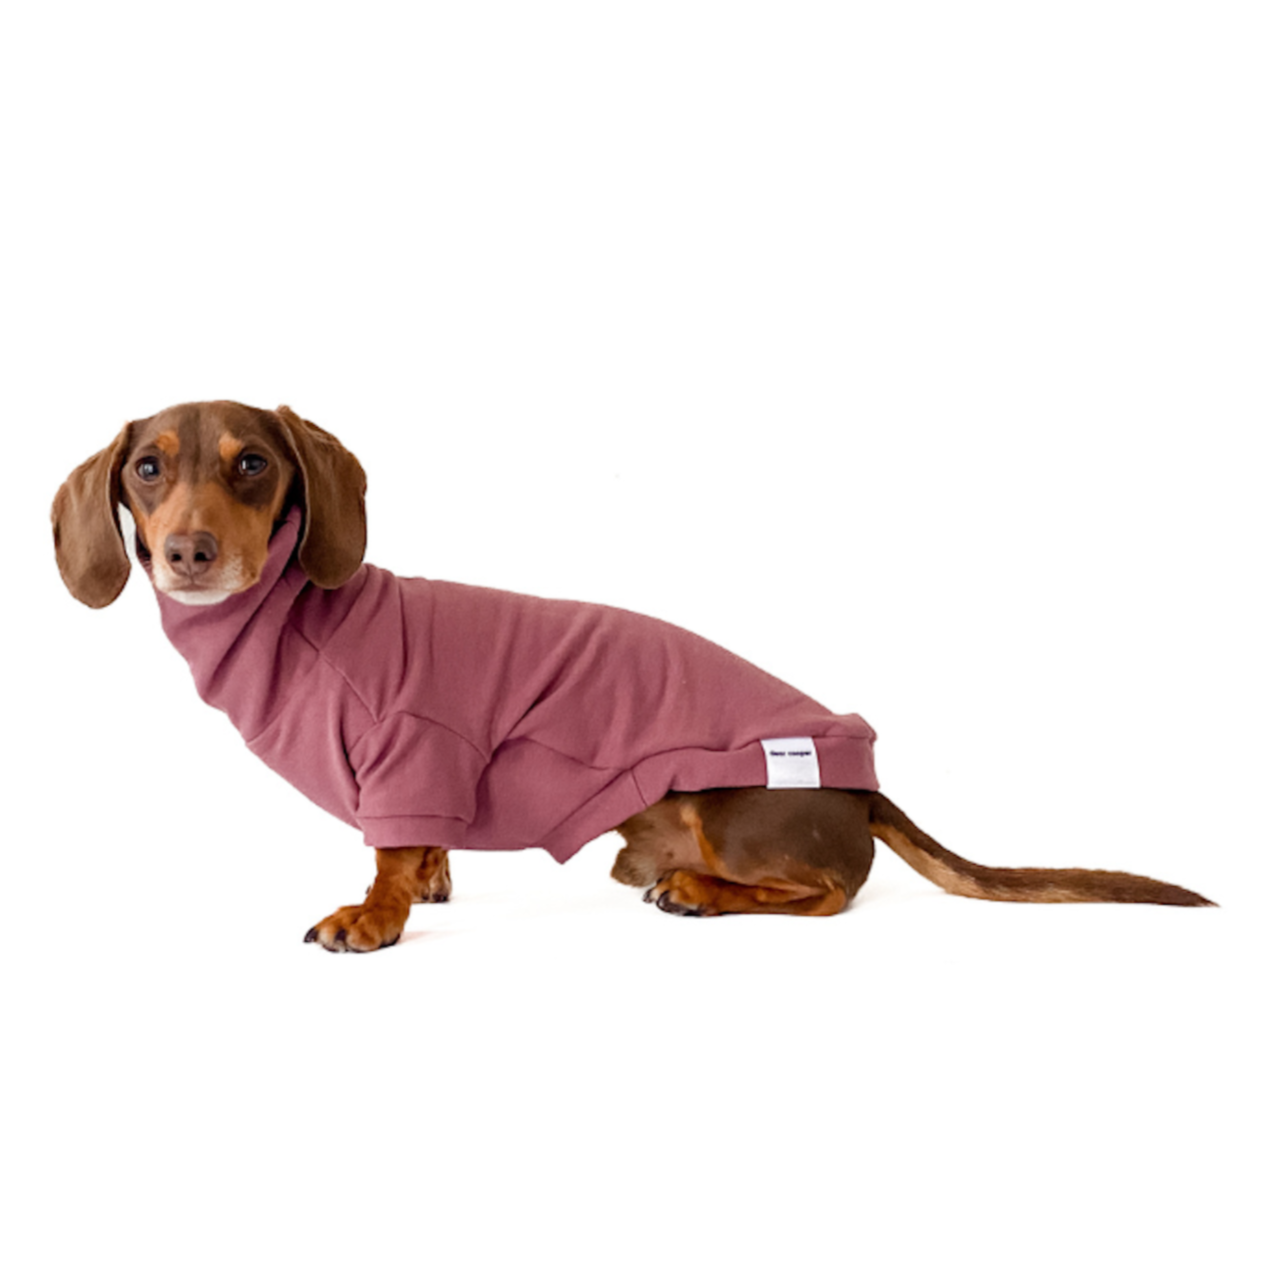 Dachshund Turtleneck Sweater (Fleece) - Rose Brown